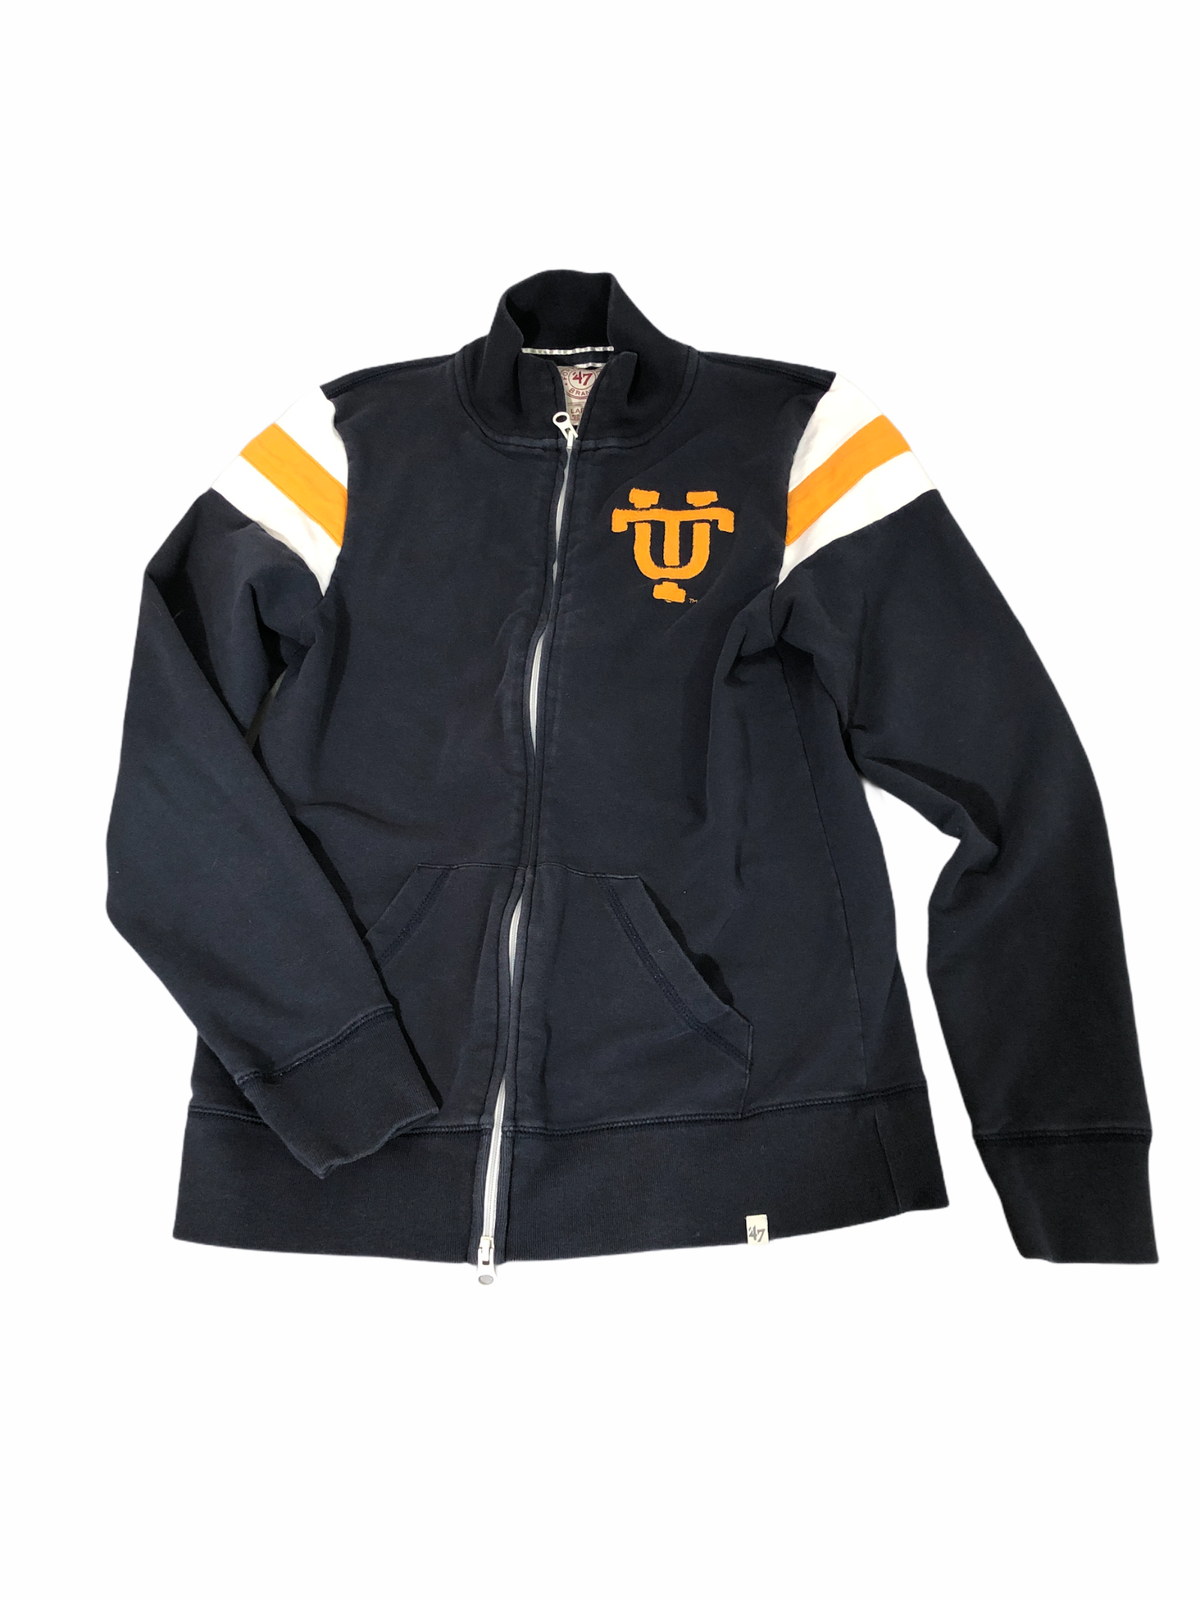 Forty Seven Brand Jacket Hoodie Full Zipper Navy Blue Orange UT Youth Large - $16.40